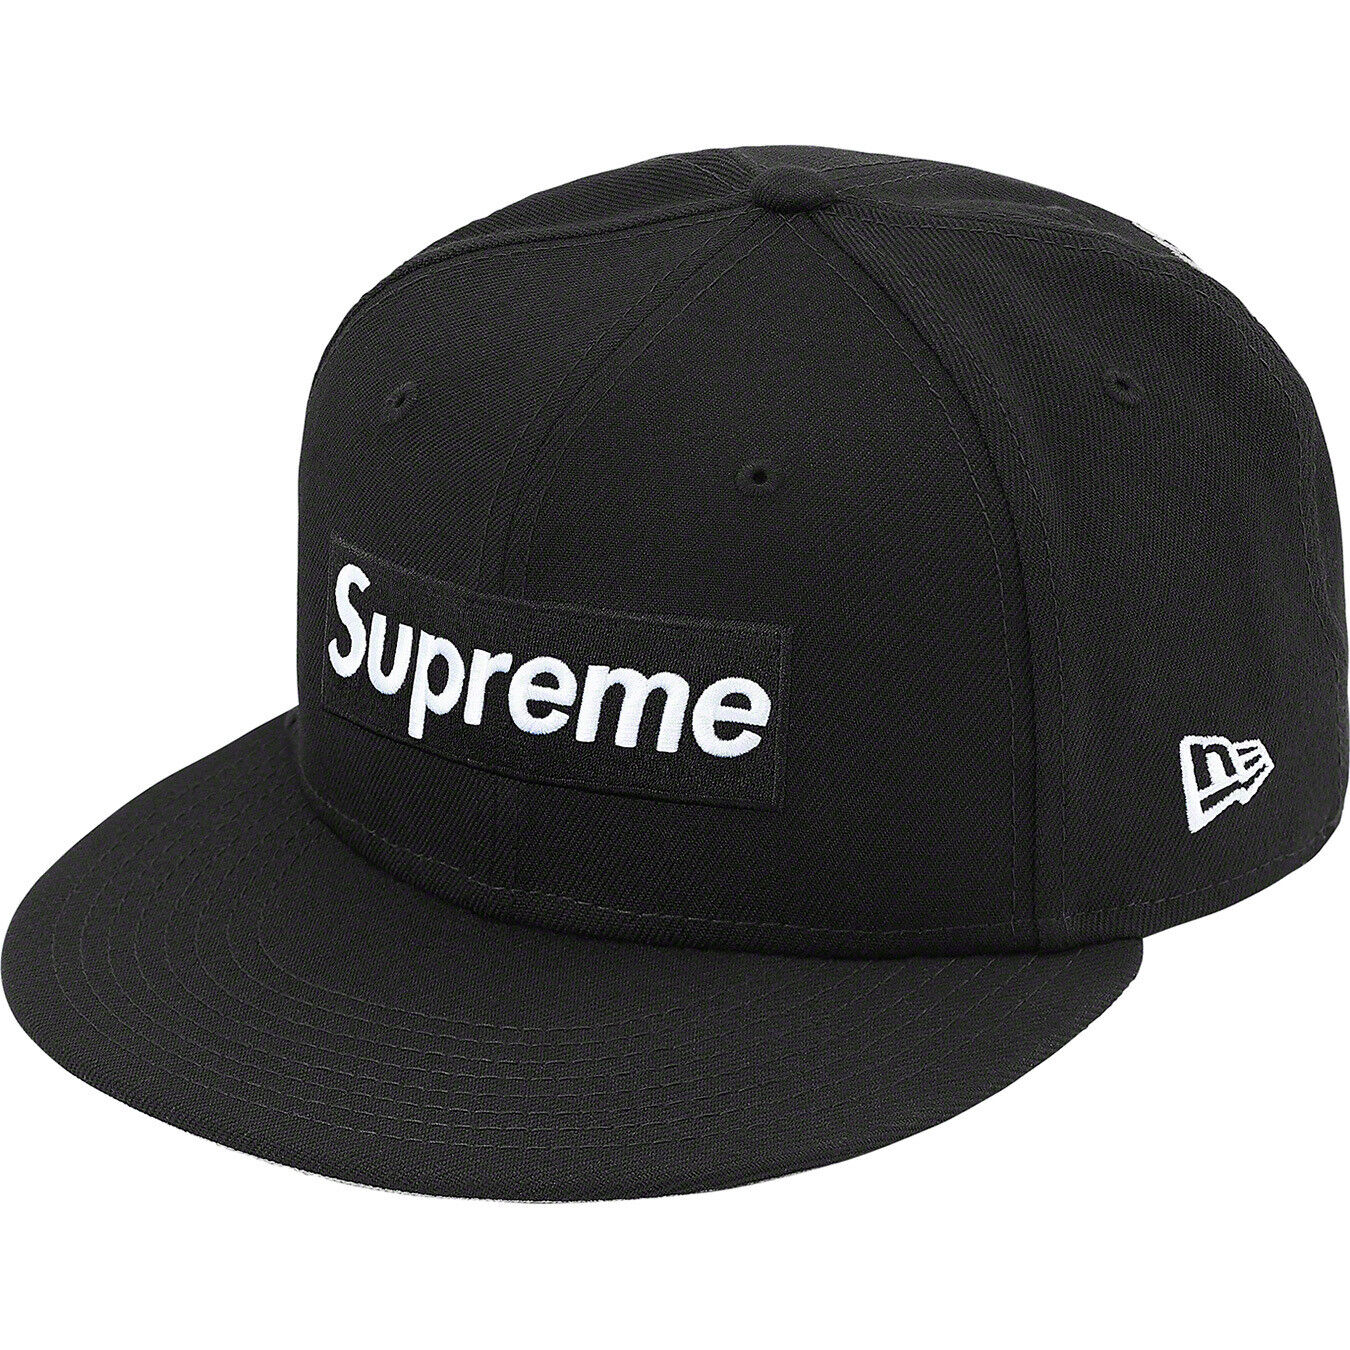 Supreme Champions Box Logo New Era Black fitted Cap Hat size 7 1/2 NEW SS21